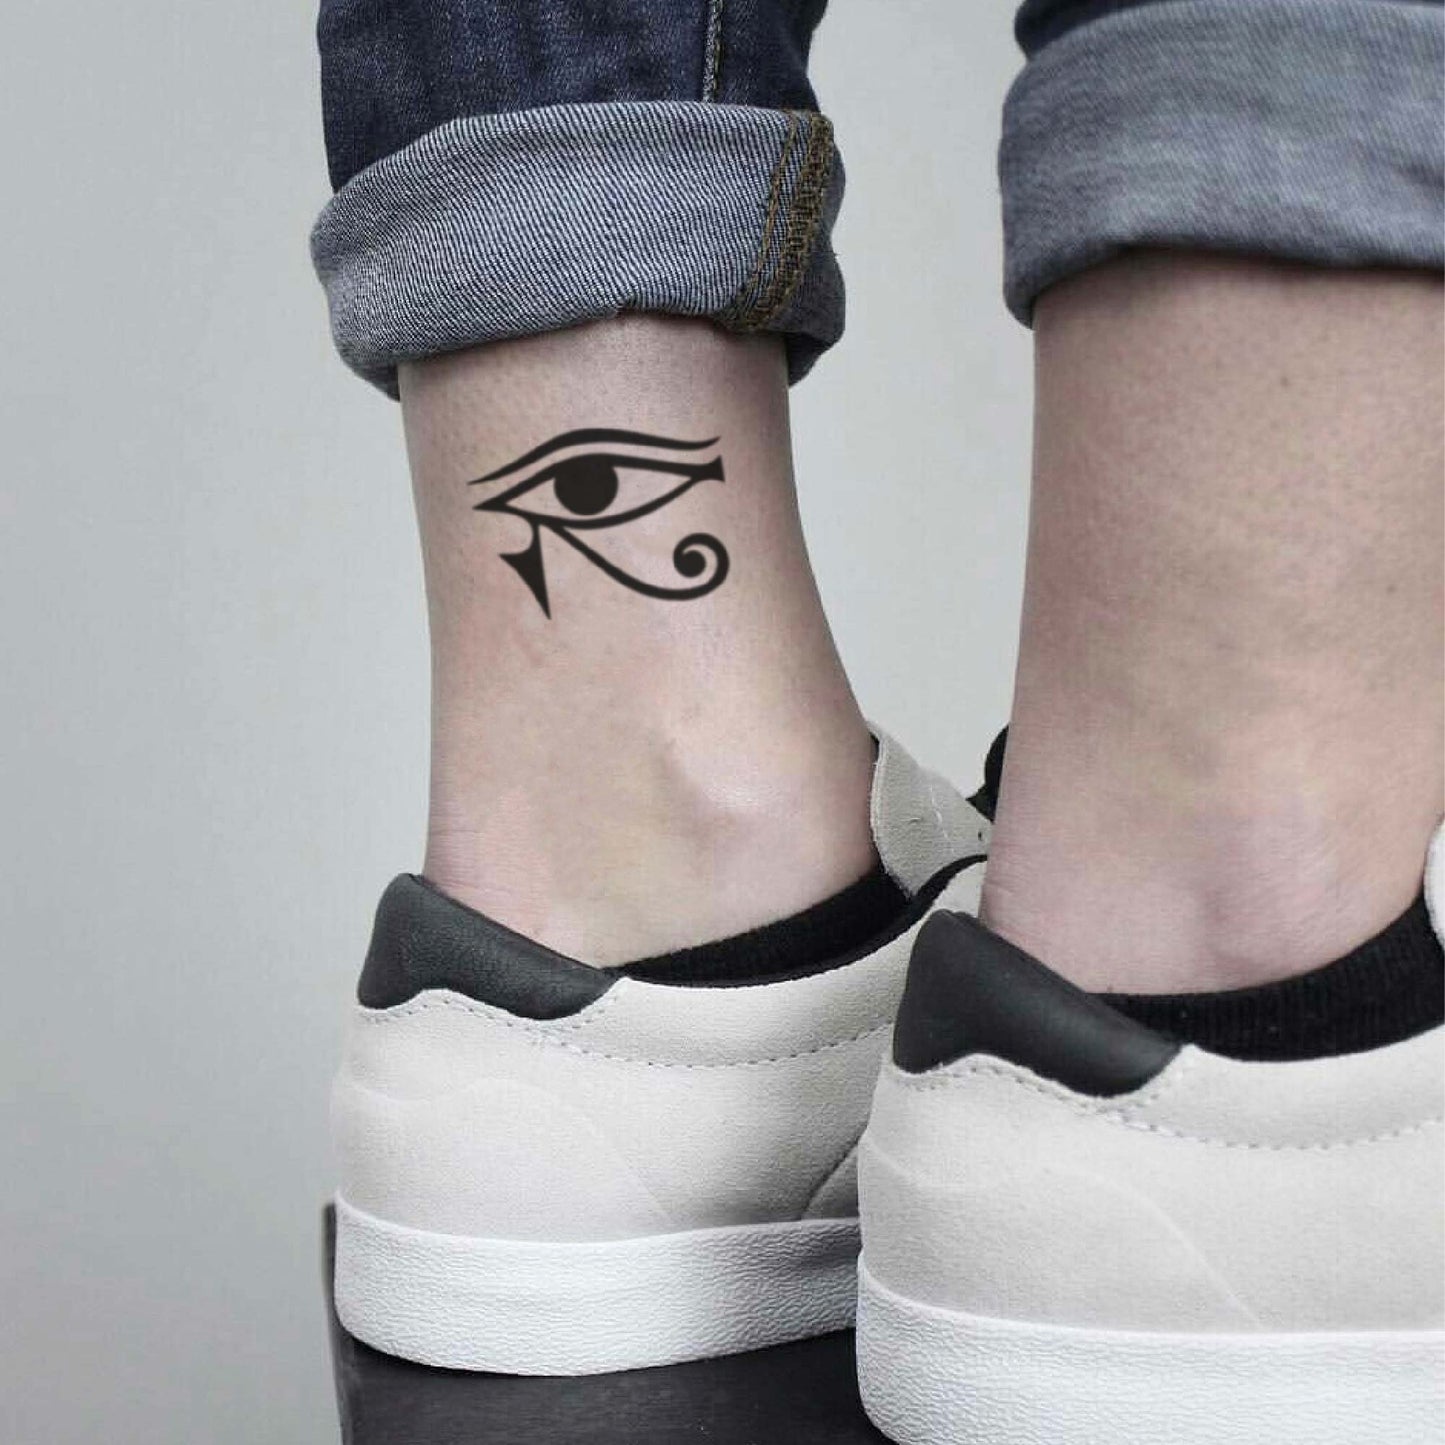 fake small the eye of horus hieroglyphics illustrative temporary tattoo sticker design idea on ankle leg